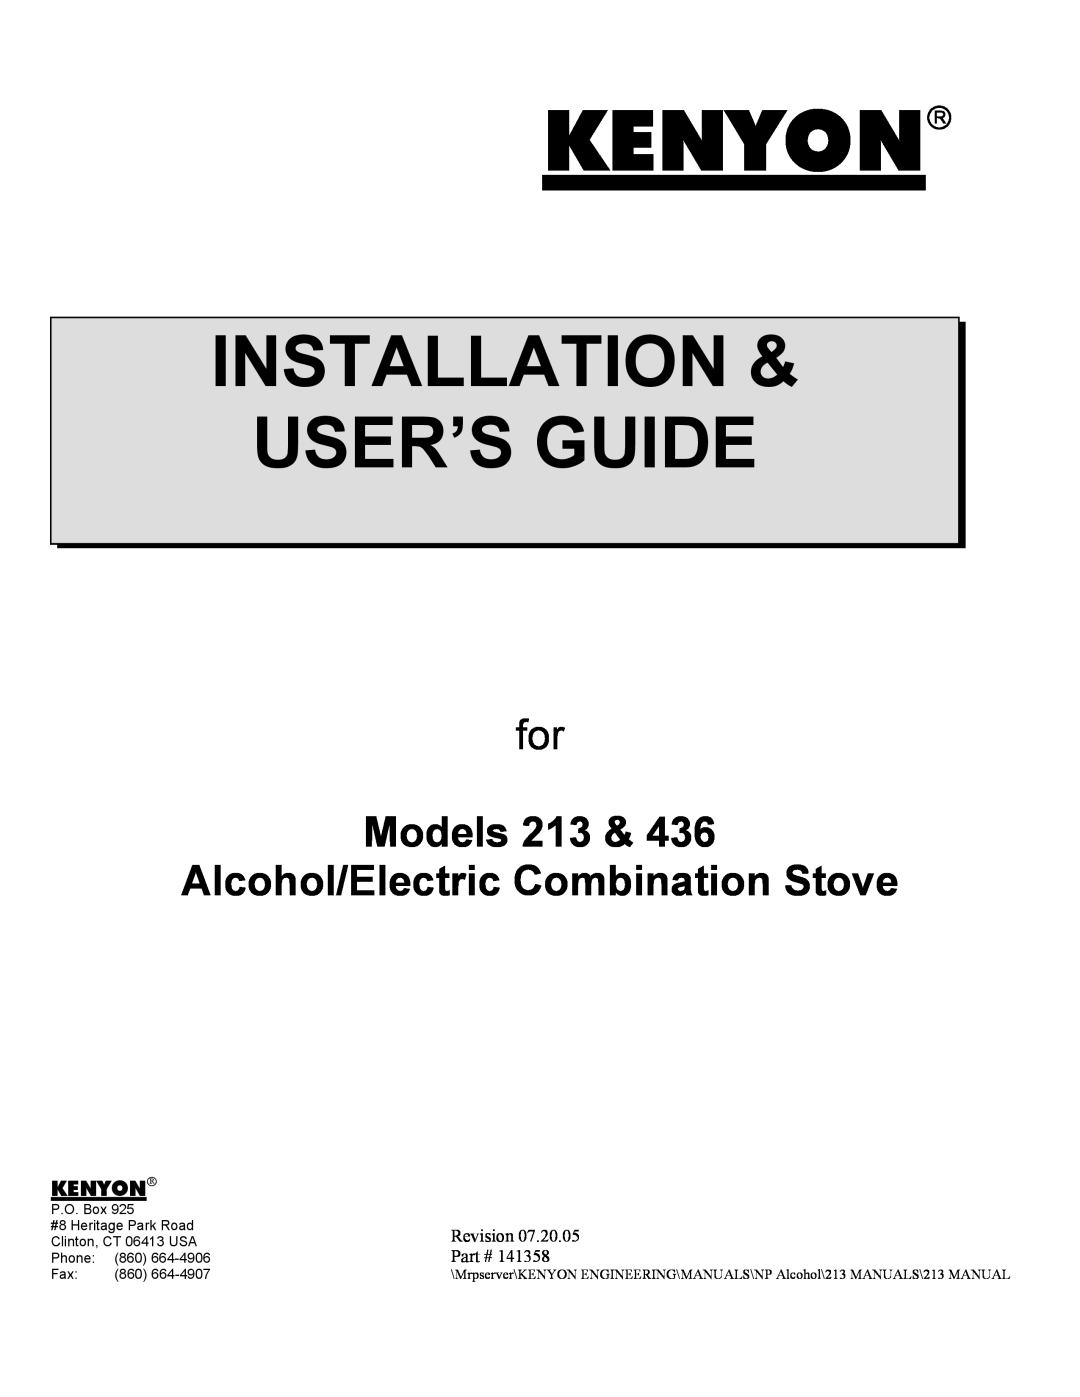 Kenyon 436 manual Kenyon, Kenyon, Installation User’S Guide, Models 213 Alcohol/Electric Combination Stove, Revision 